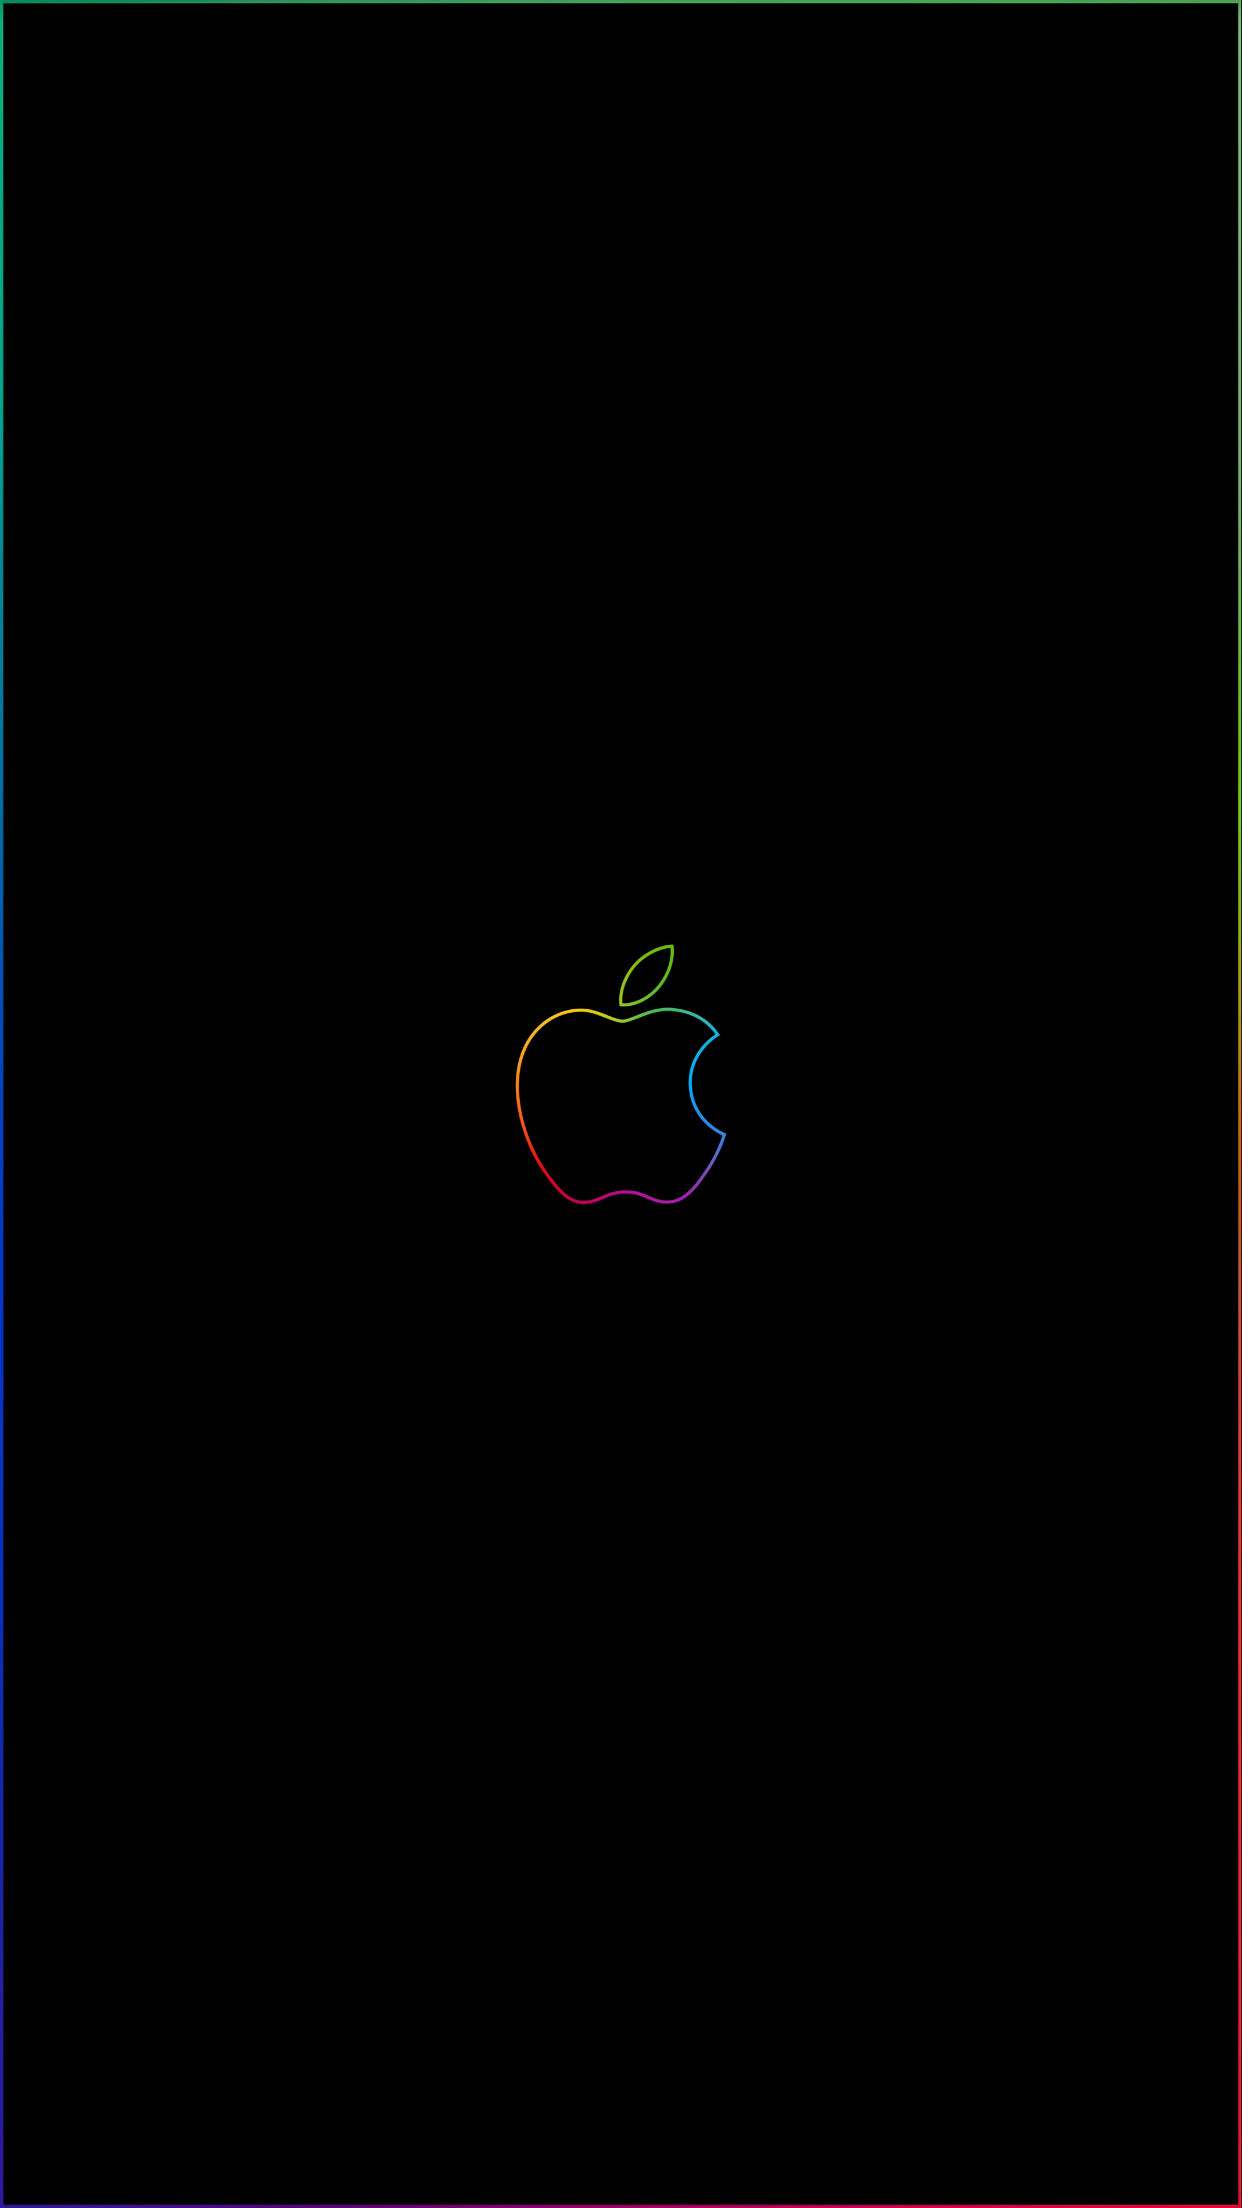 Rainbow border & apple logo iPhone wallpaper Imgur links